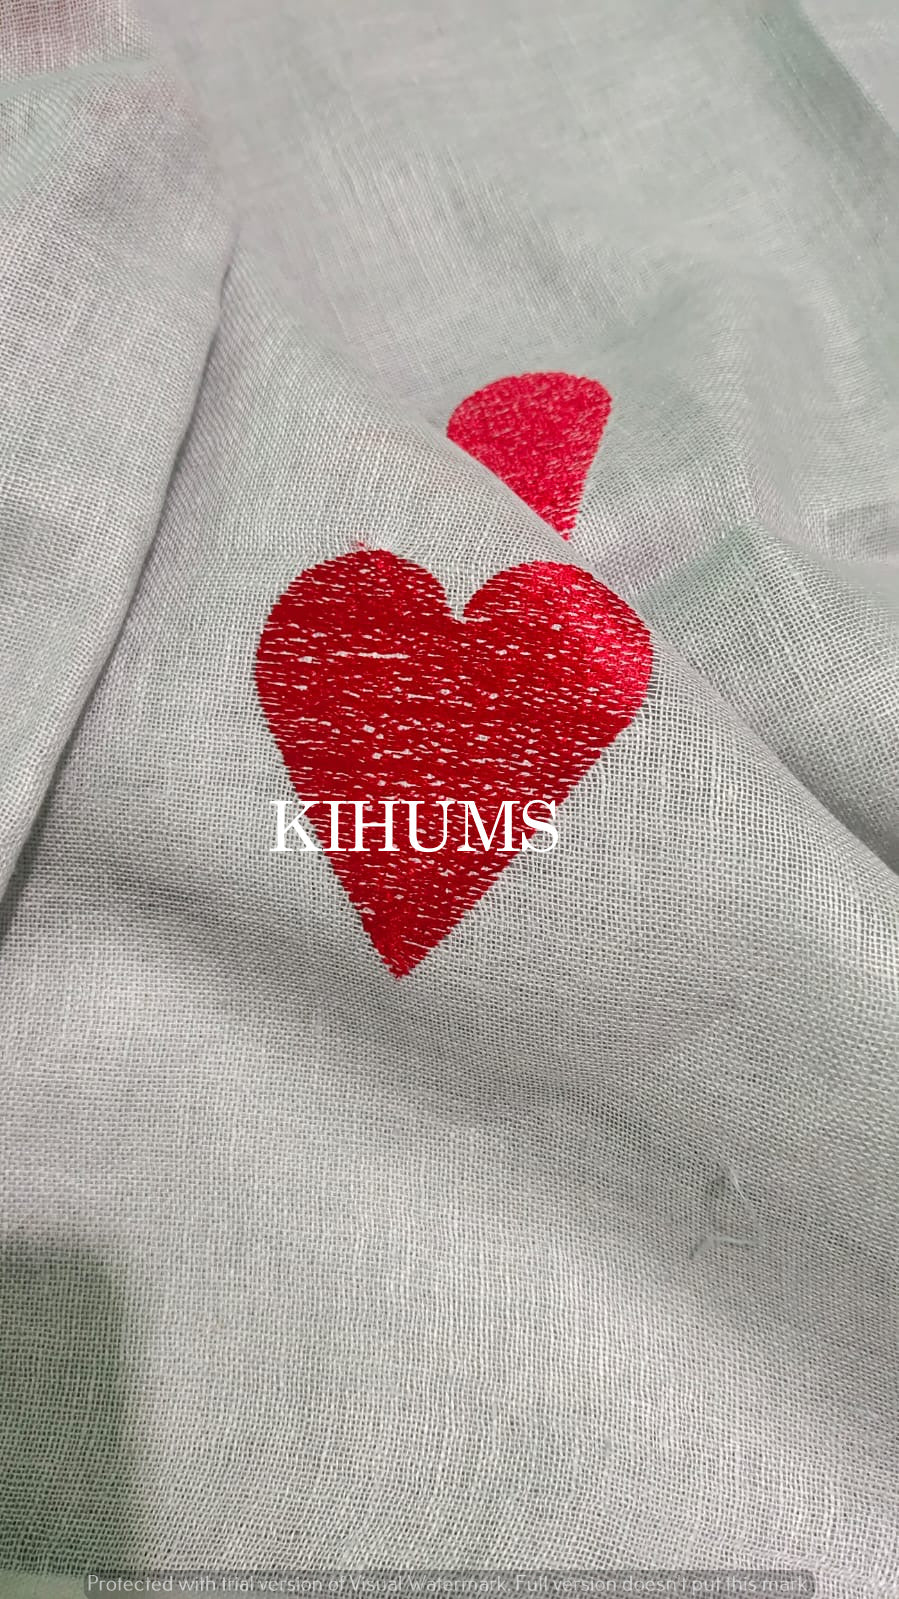 Ash grey Handwoven Linen Saree with Heart Embroidery Work | KIHUMS Saree